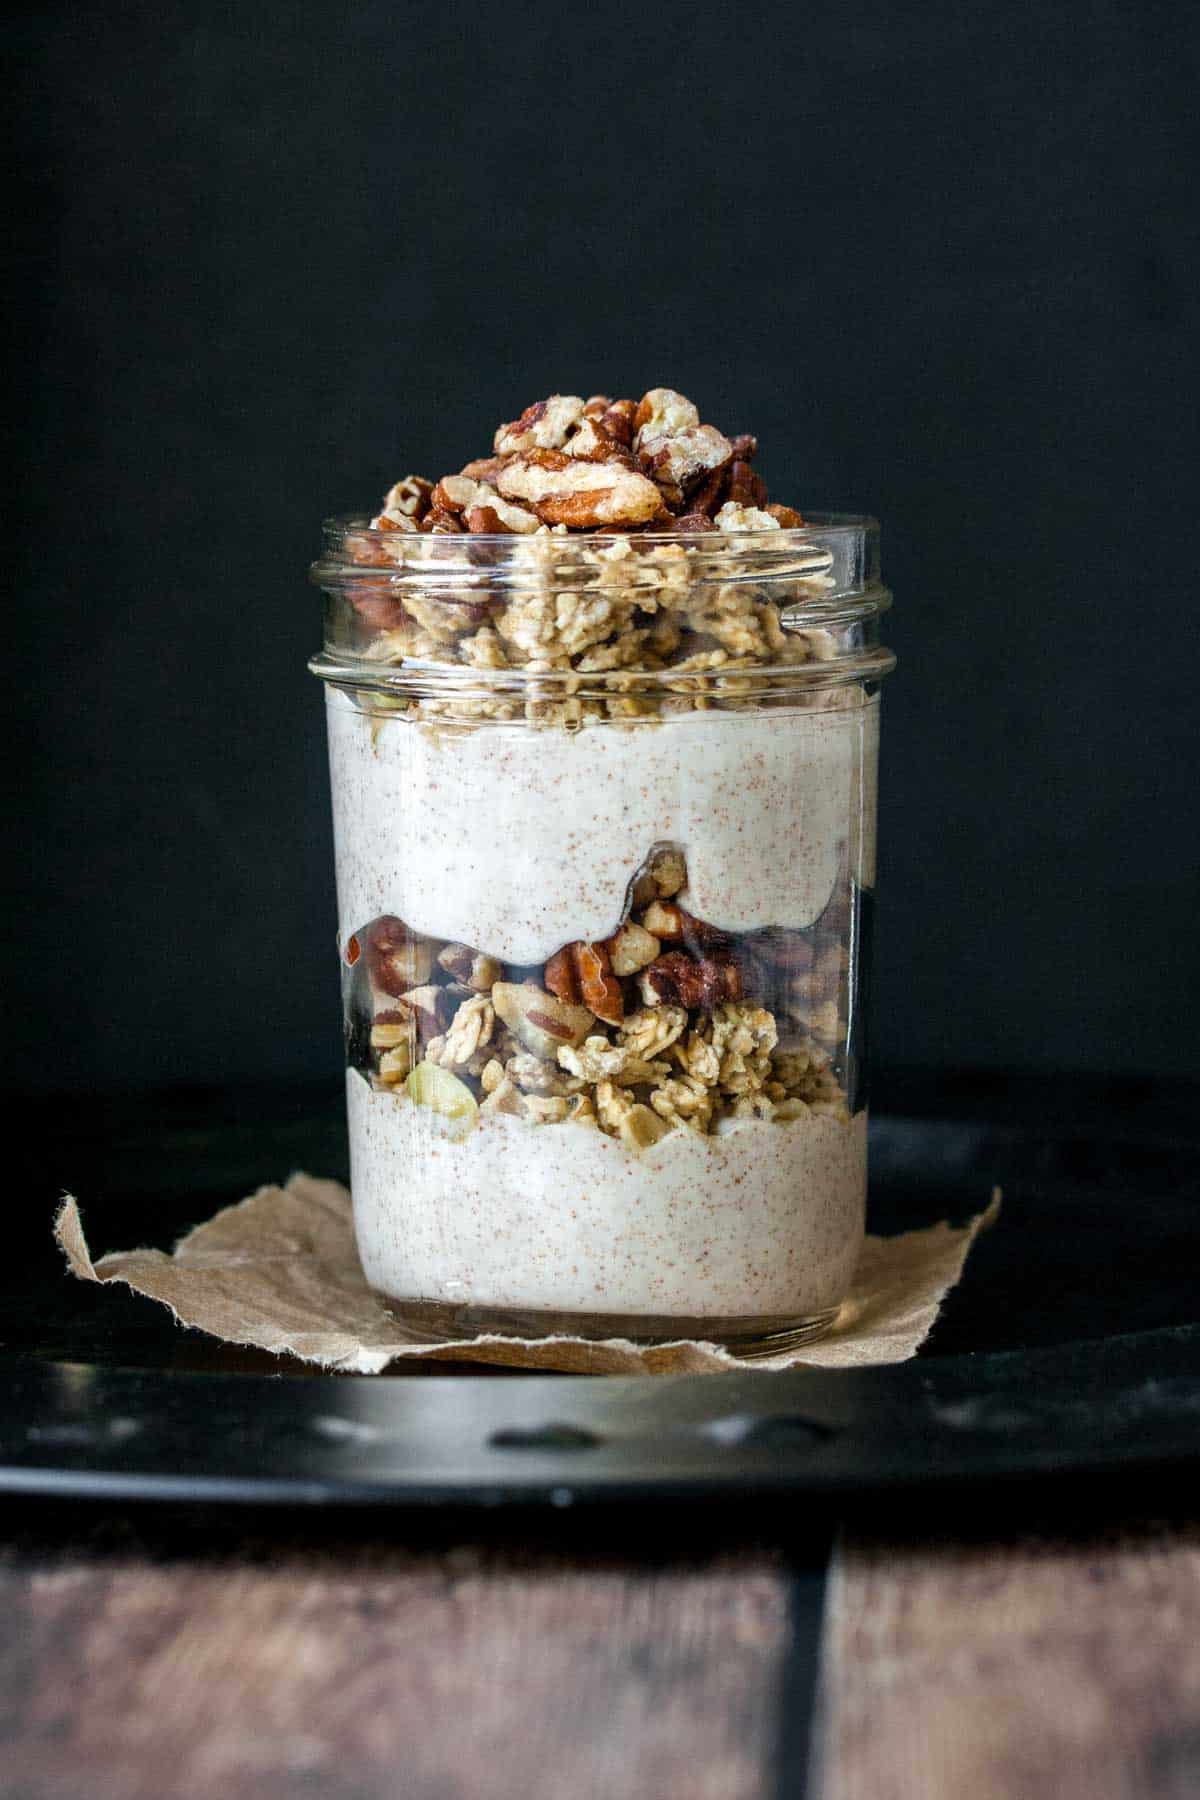 Cinnamon yogurt parfait in a glass jar on a plate